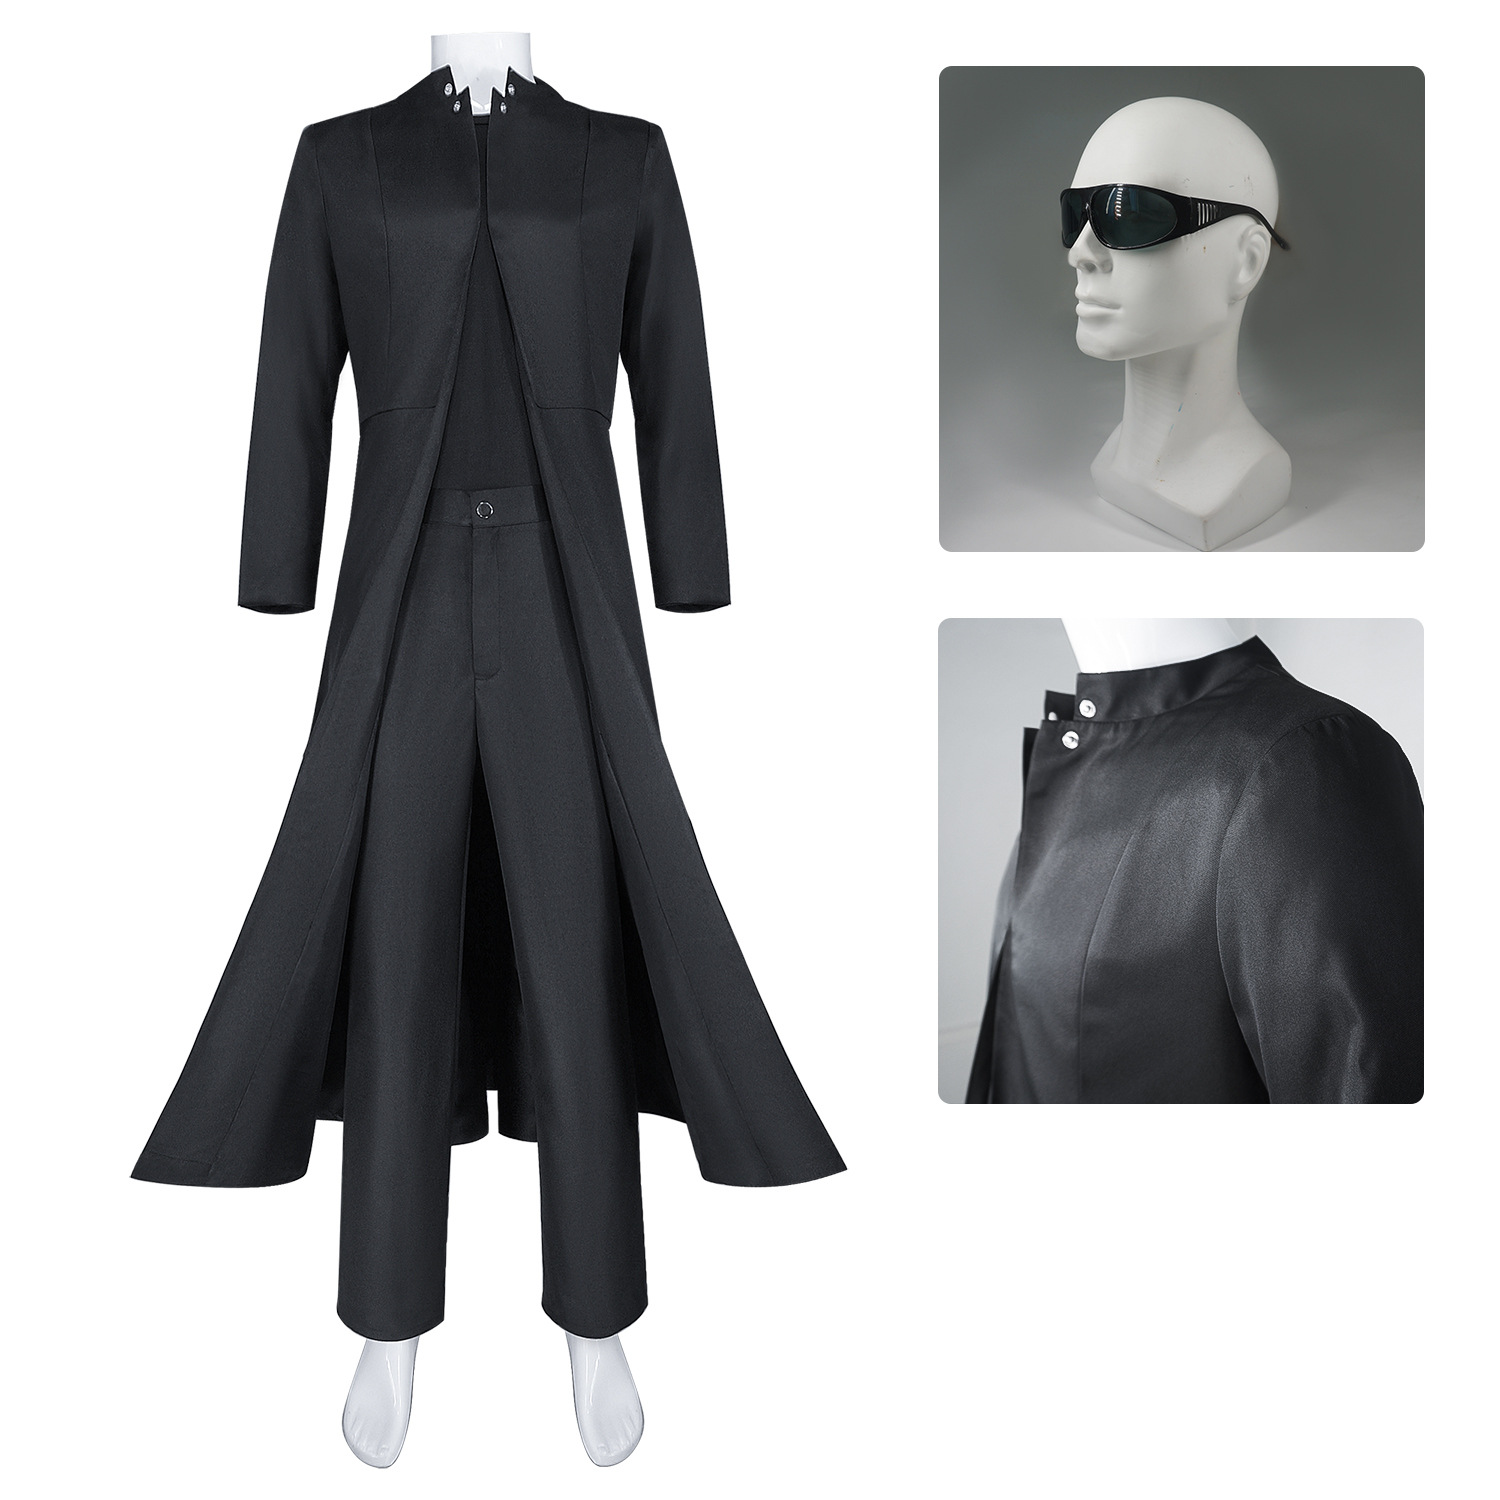 Movie The Matrix 4 Neo cosplay costume Neo trench coat cosplay costume coat